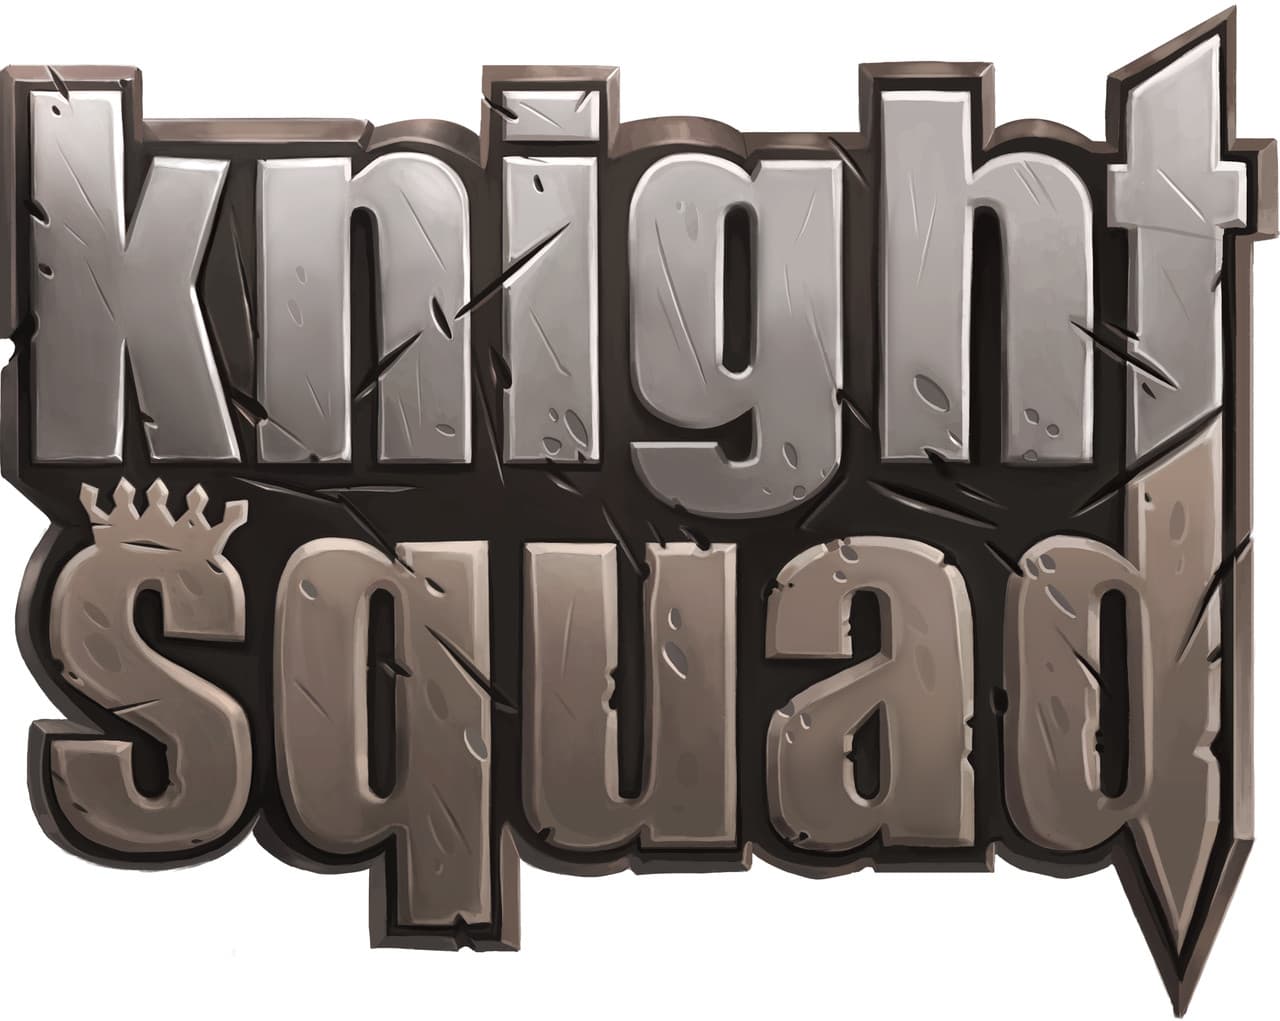 Jaquette Knight Squad